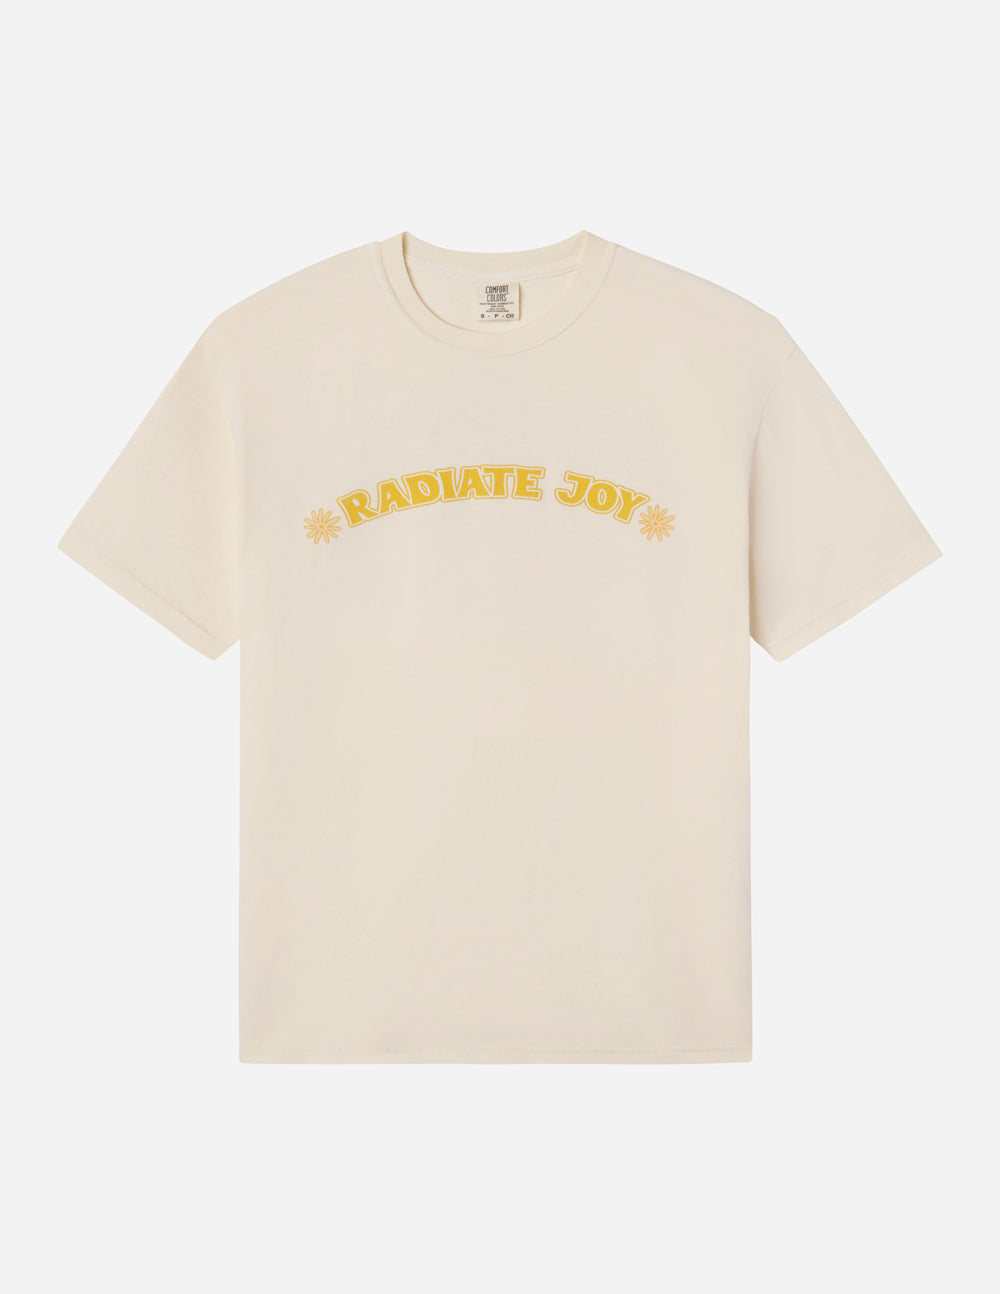 Radiate Joy Unisex Tee | Christian T-Shirts | Elevated Faith